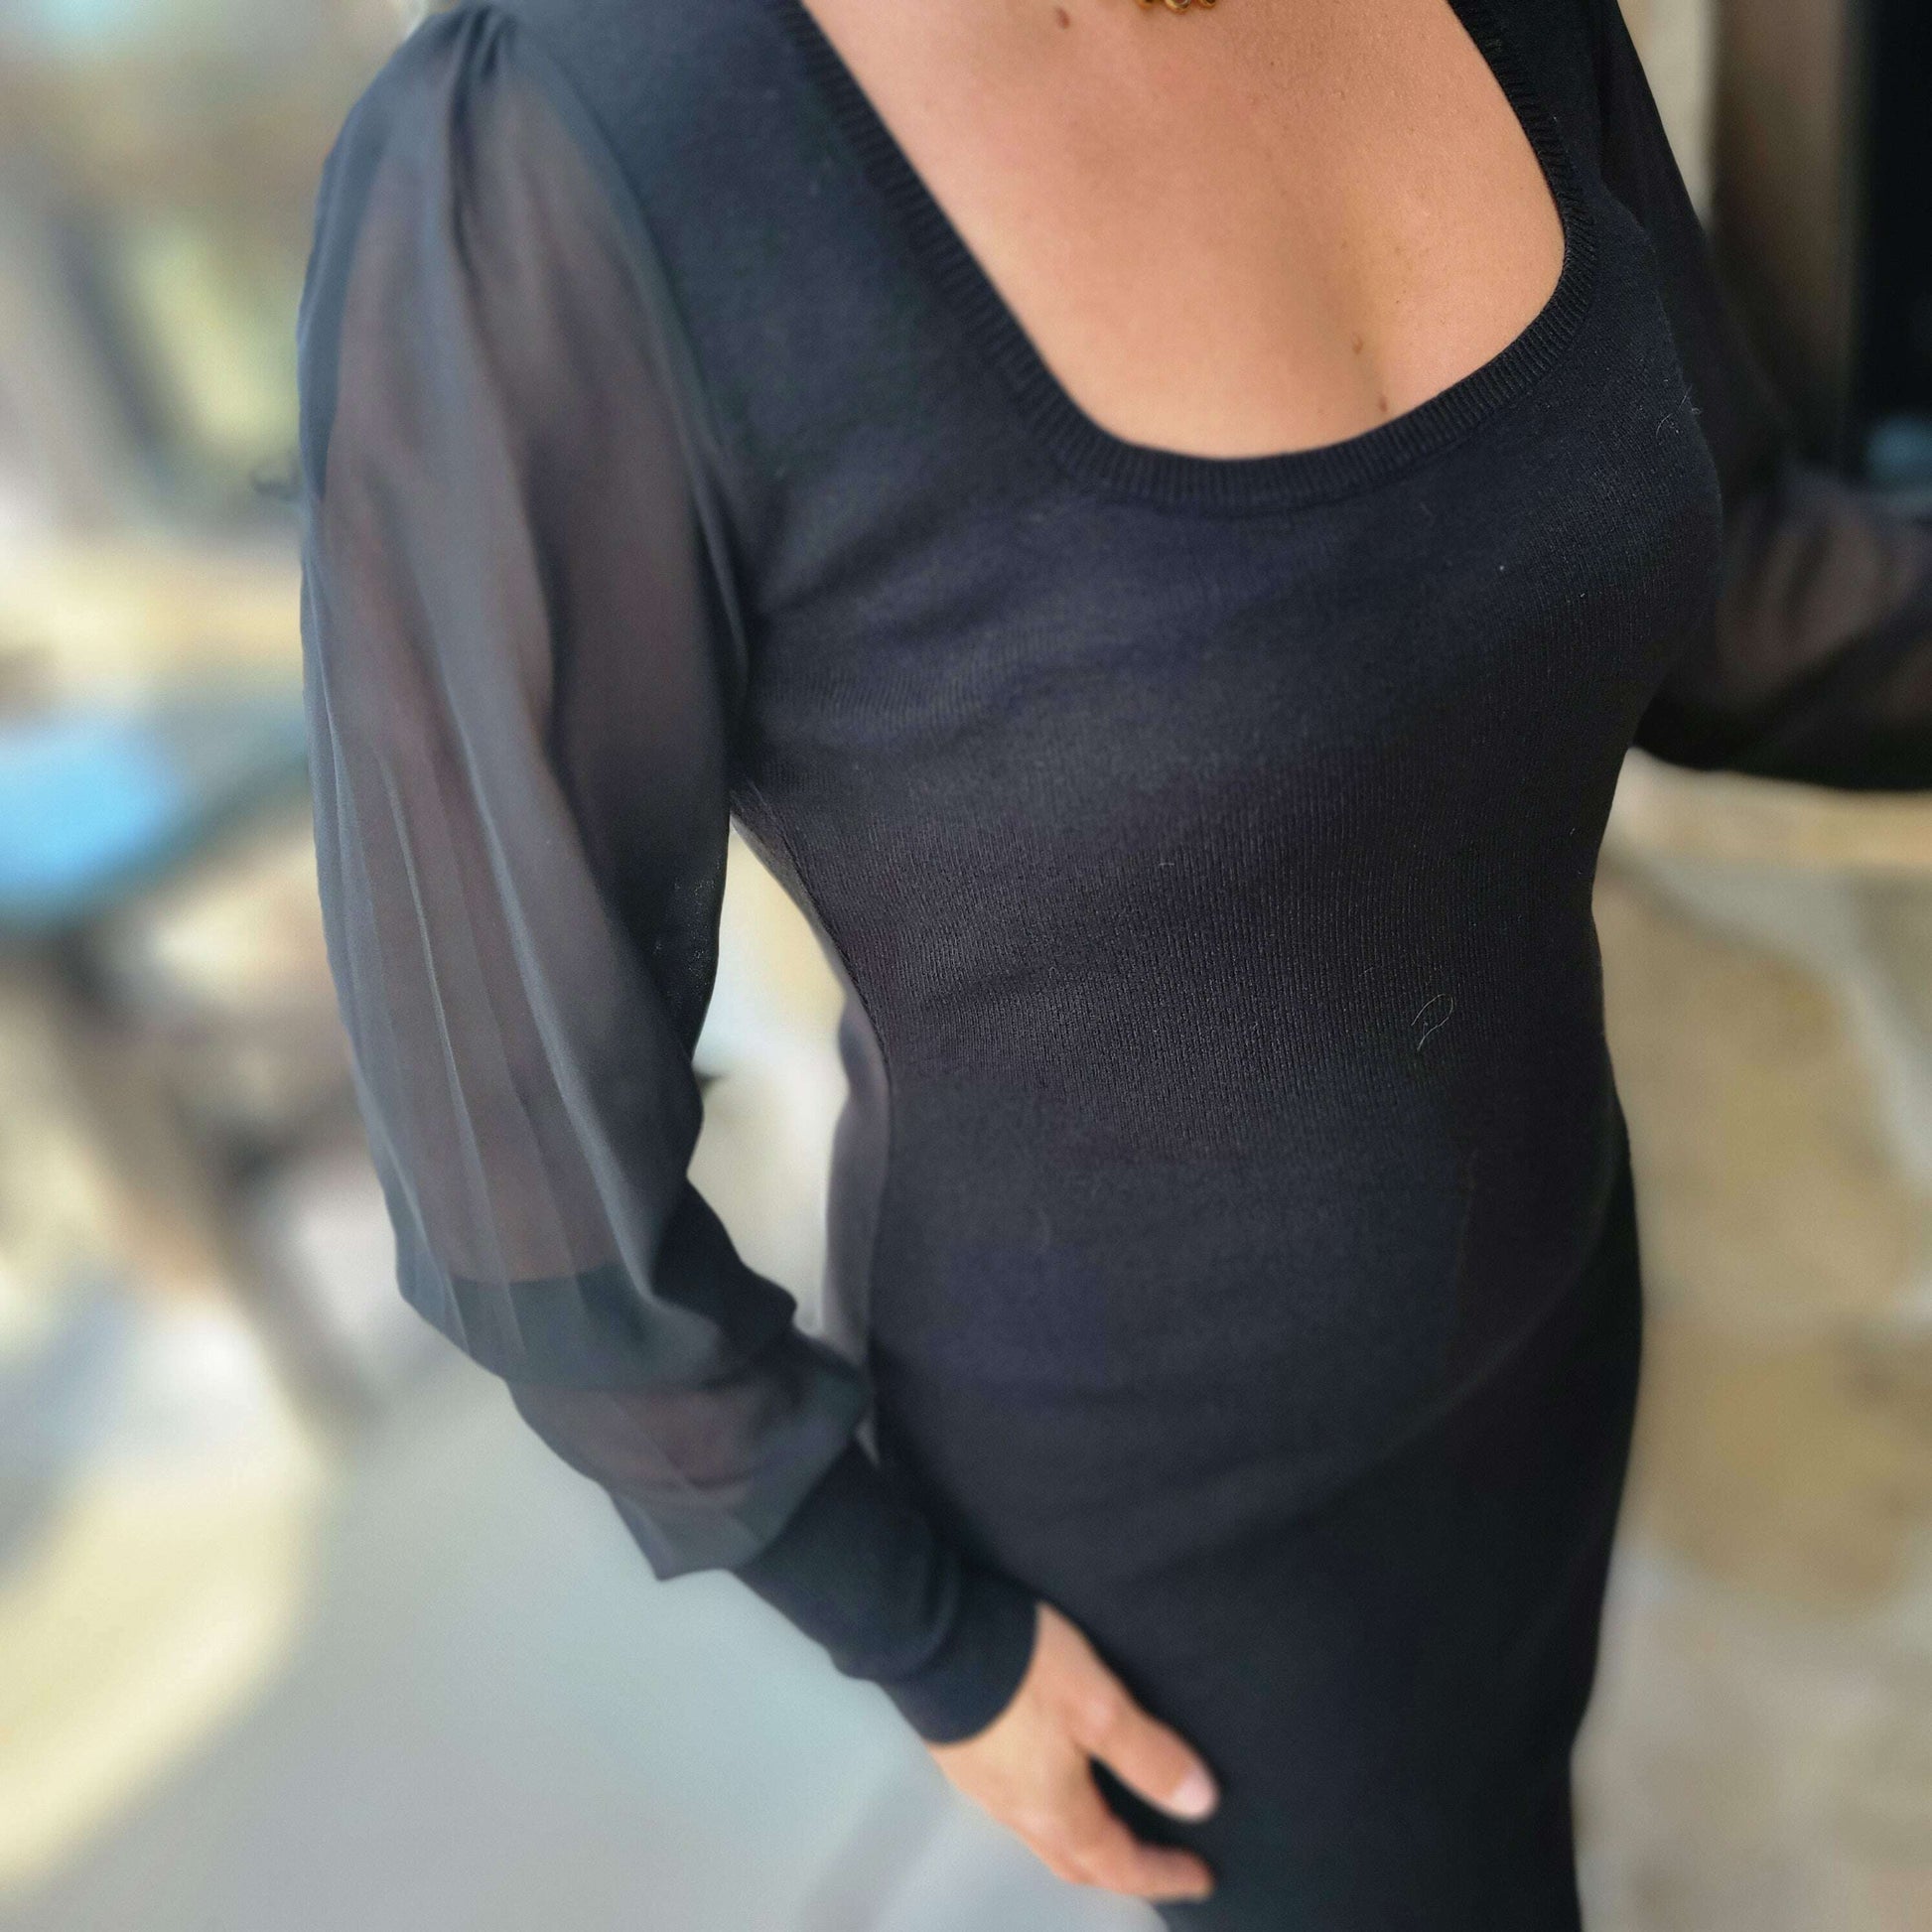 Apricot - Bodycon Knitted Mini Dress - Black, CLOTHING, APRICOT, Plum Bottom